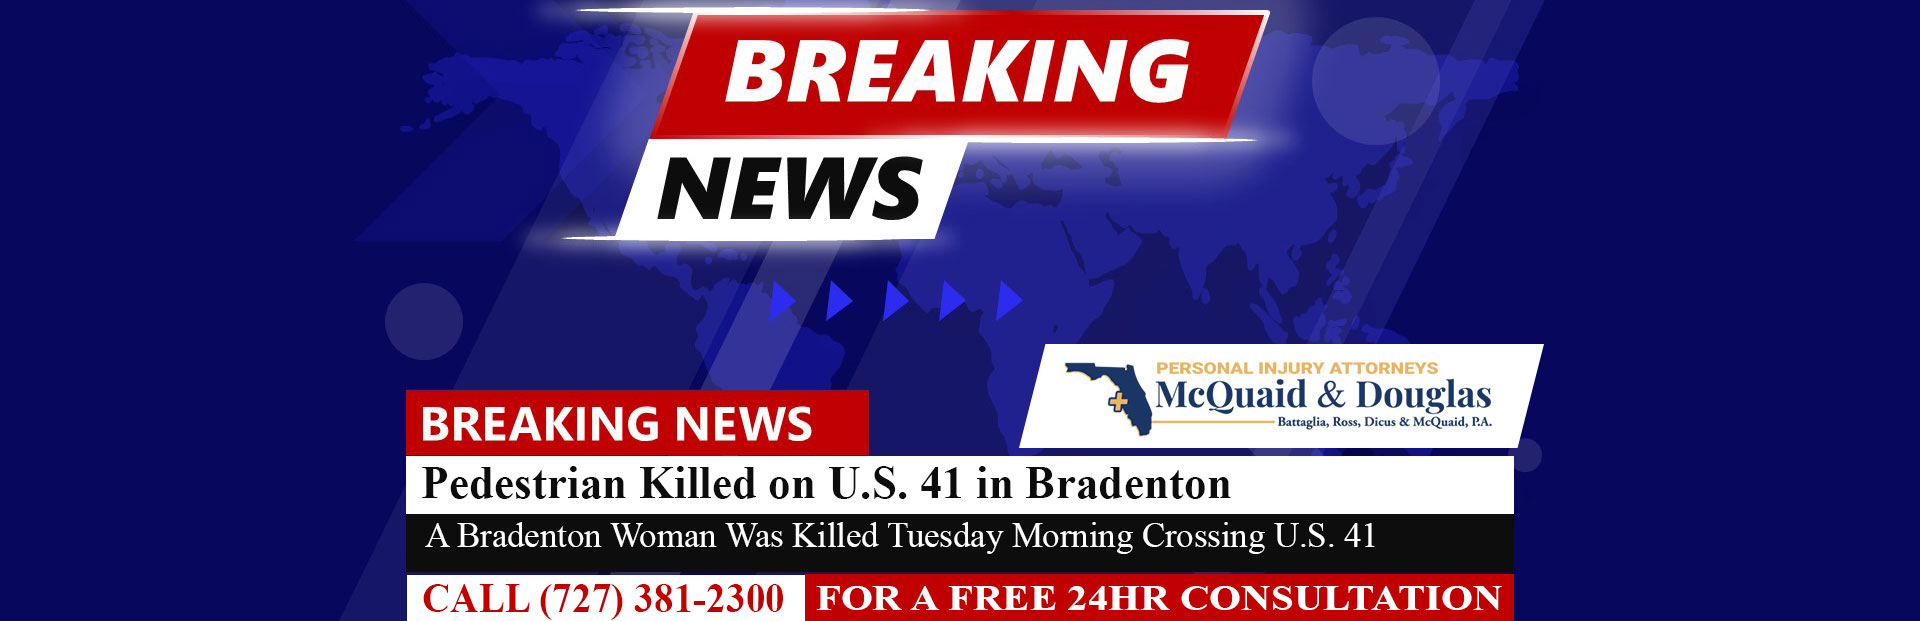 [5-24-22] Pedestrian Killed on U.S. 41 in Bradenton